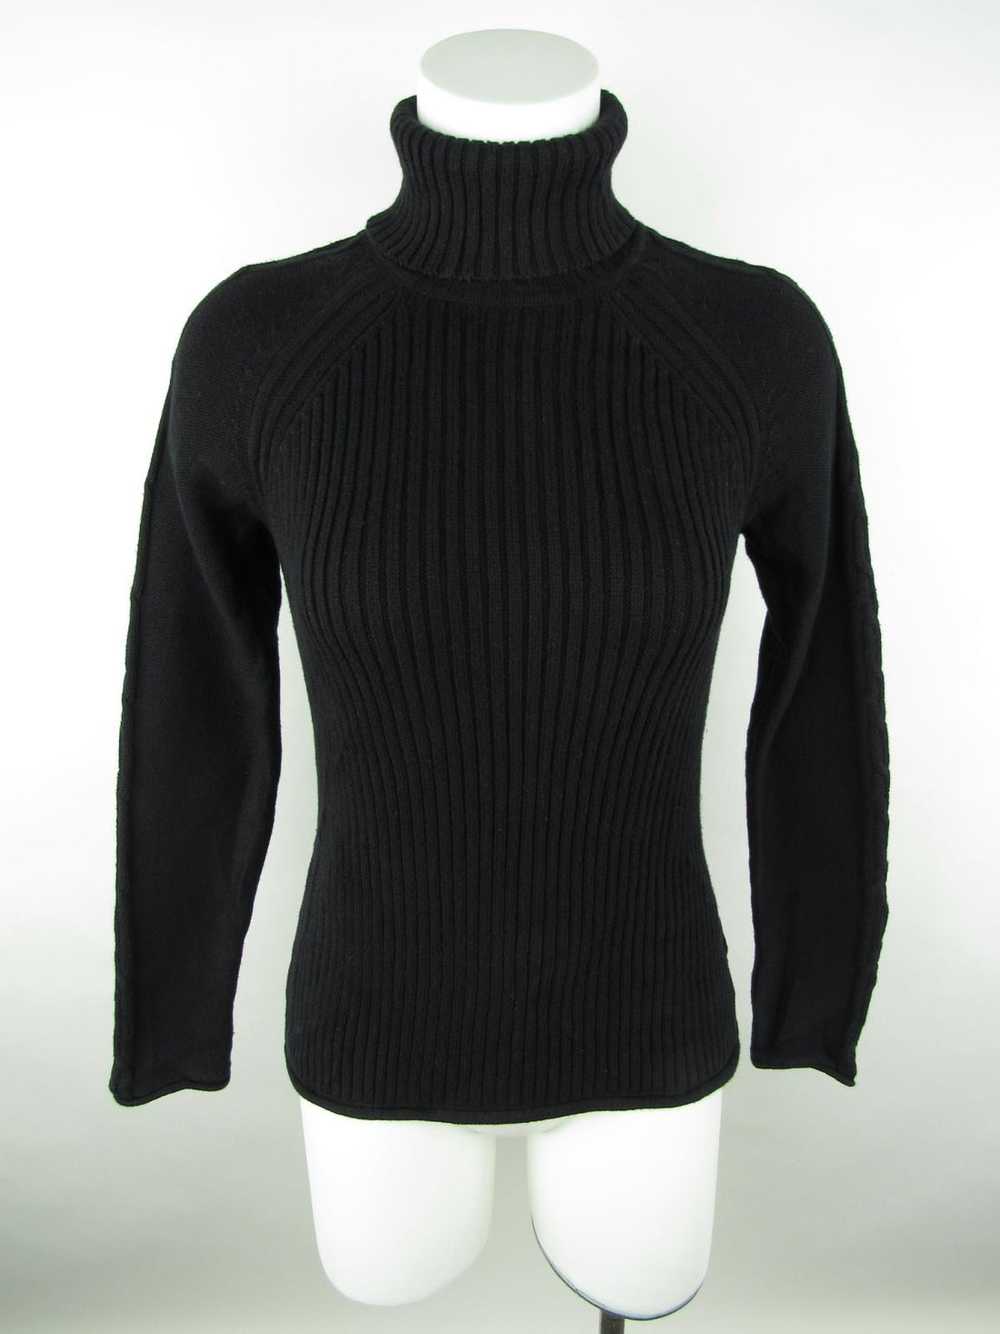 Style & co Turtleneck Sweater - image 1